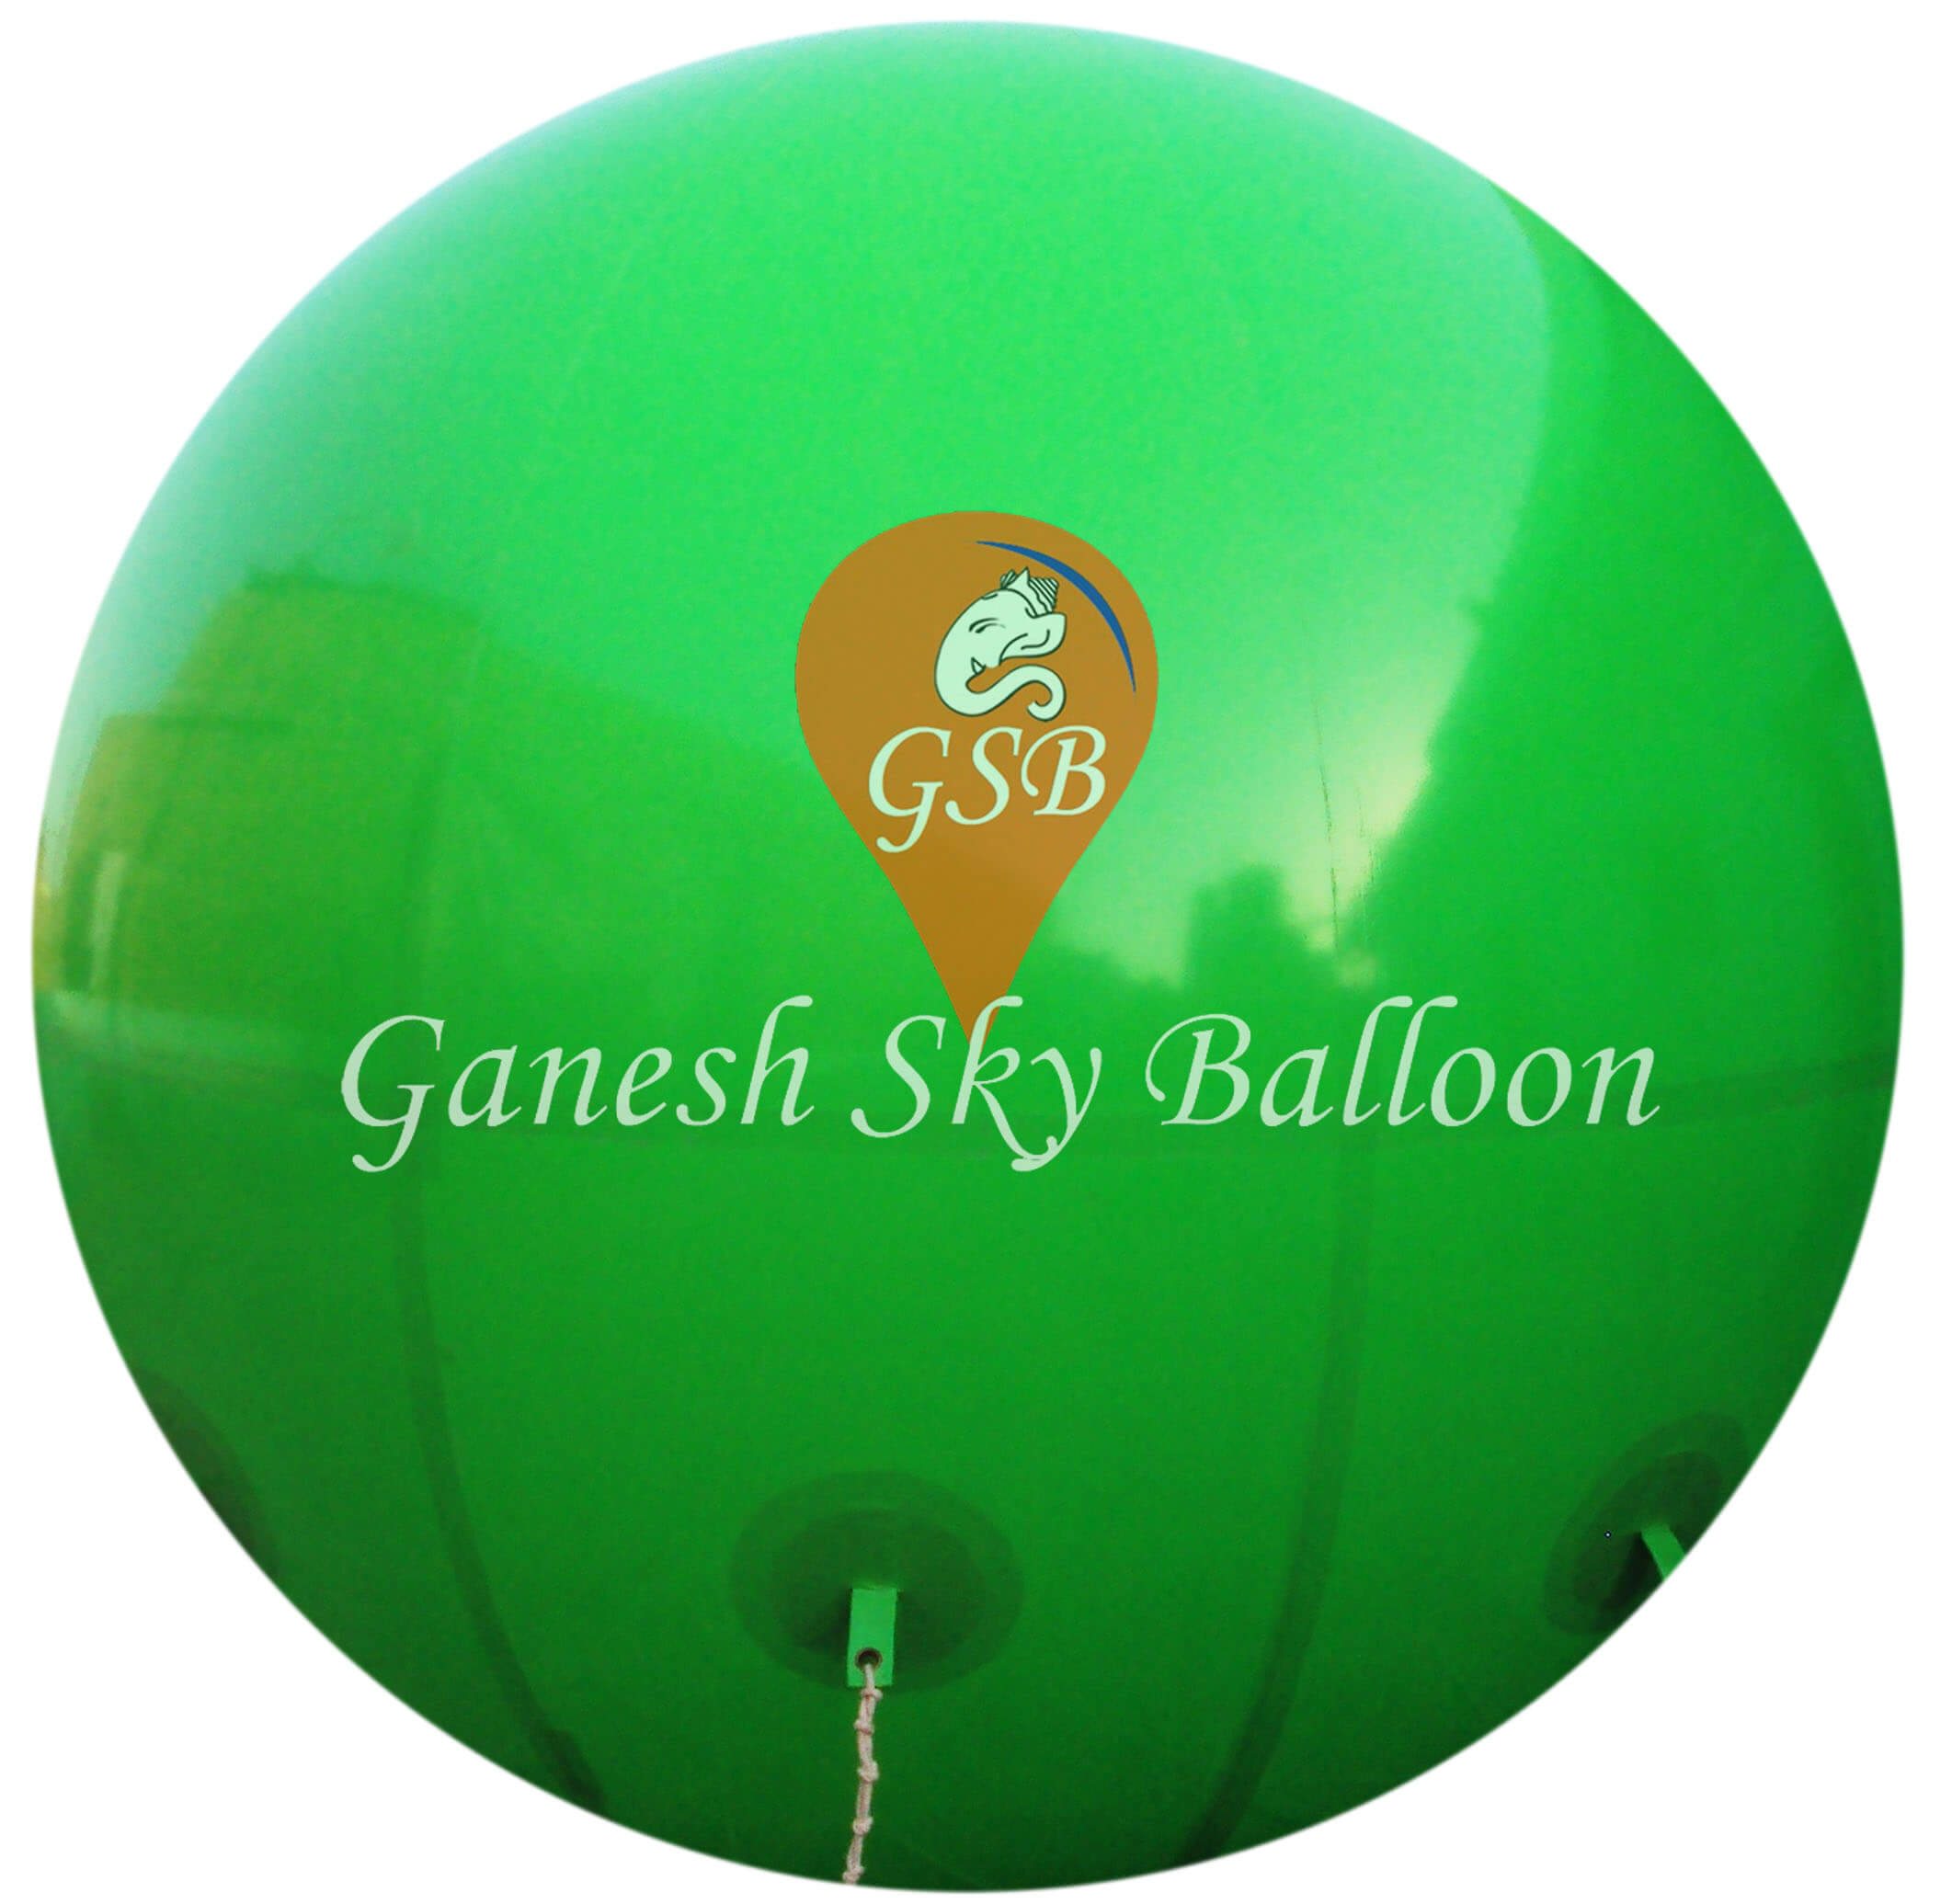 BSP Advertising Sky Balloons